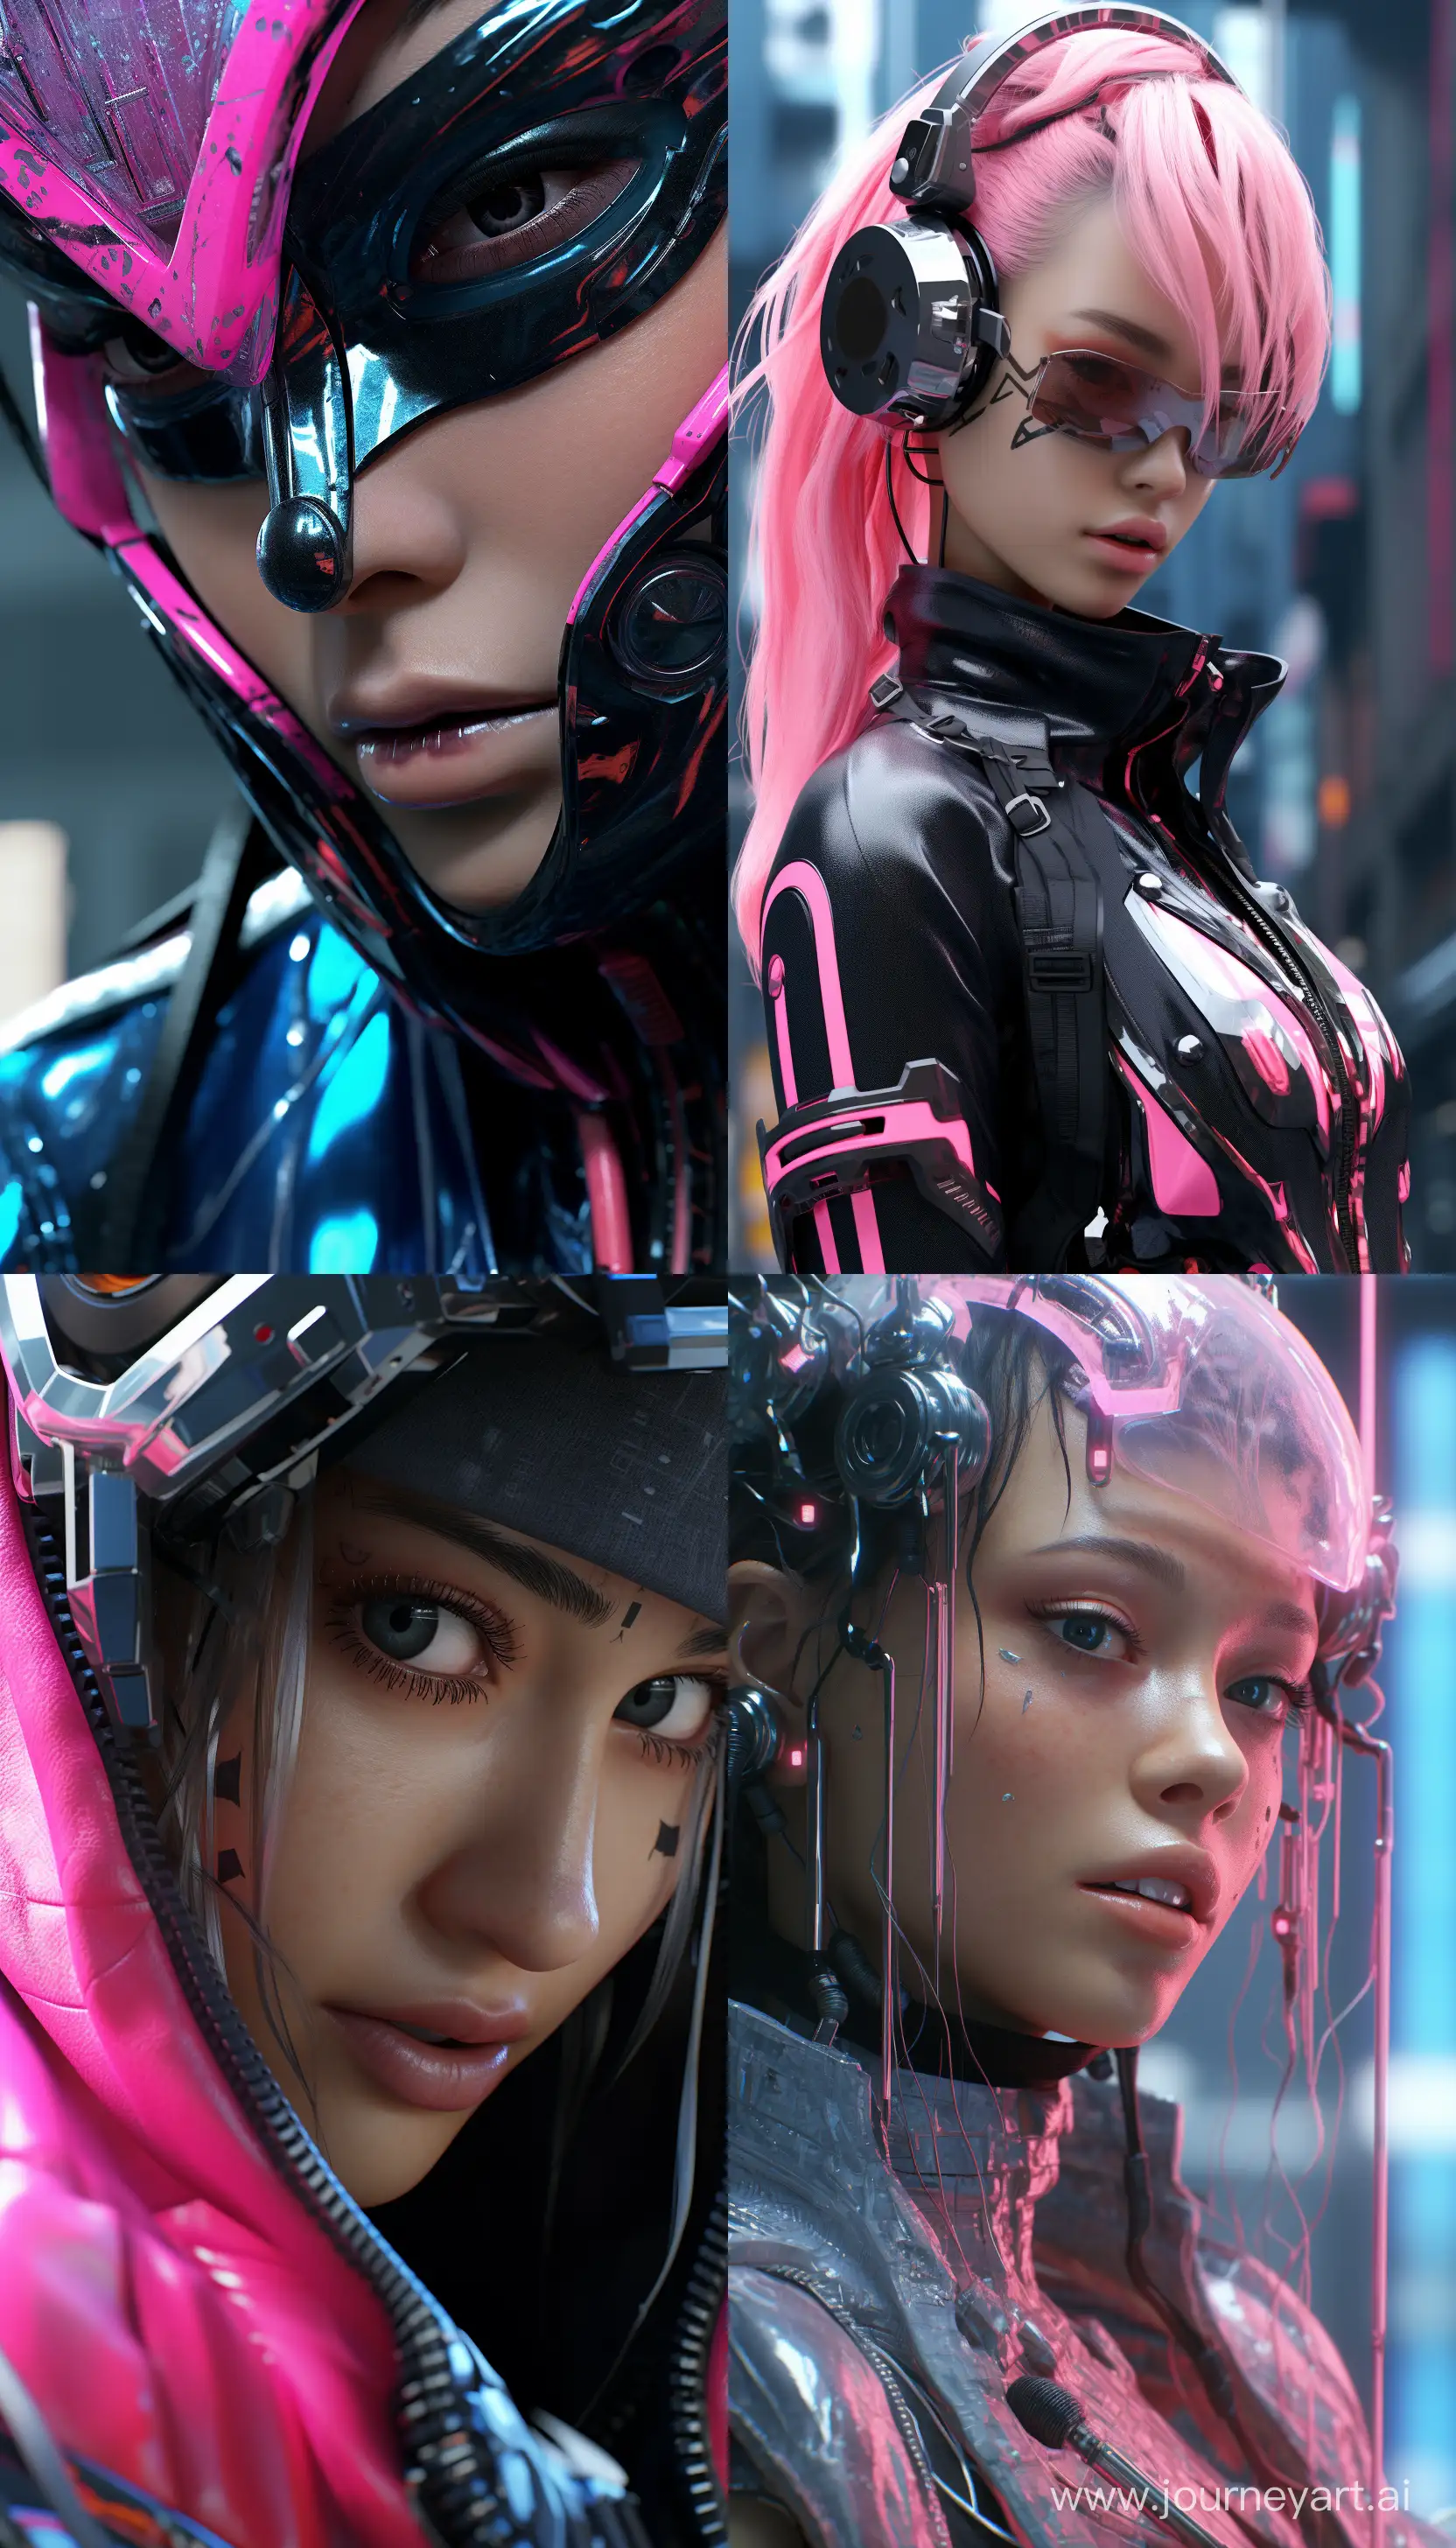 Futuristic-PinkEyed-Alien-in-Cyberpunk-Dystopia-Fairycore-SoftFocused-Realism